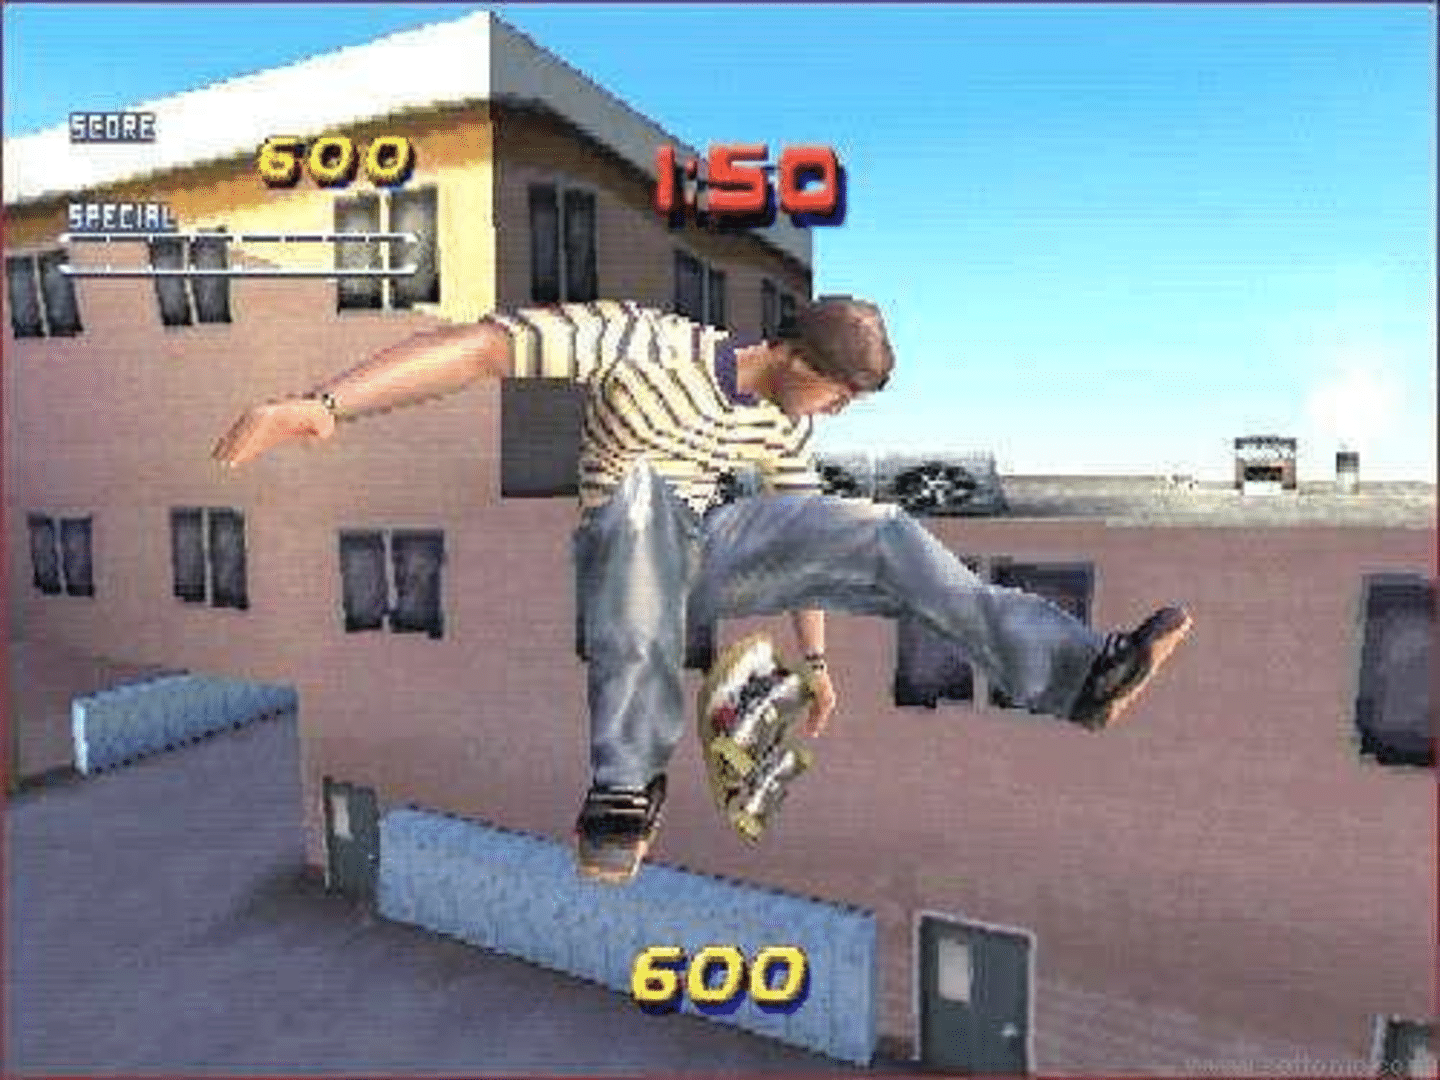 Tony Hawk's Pro Skater 2 screenshot